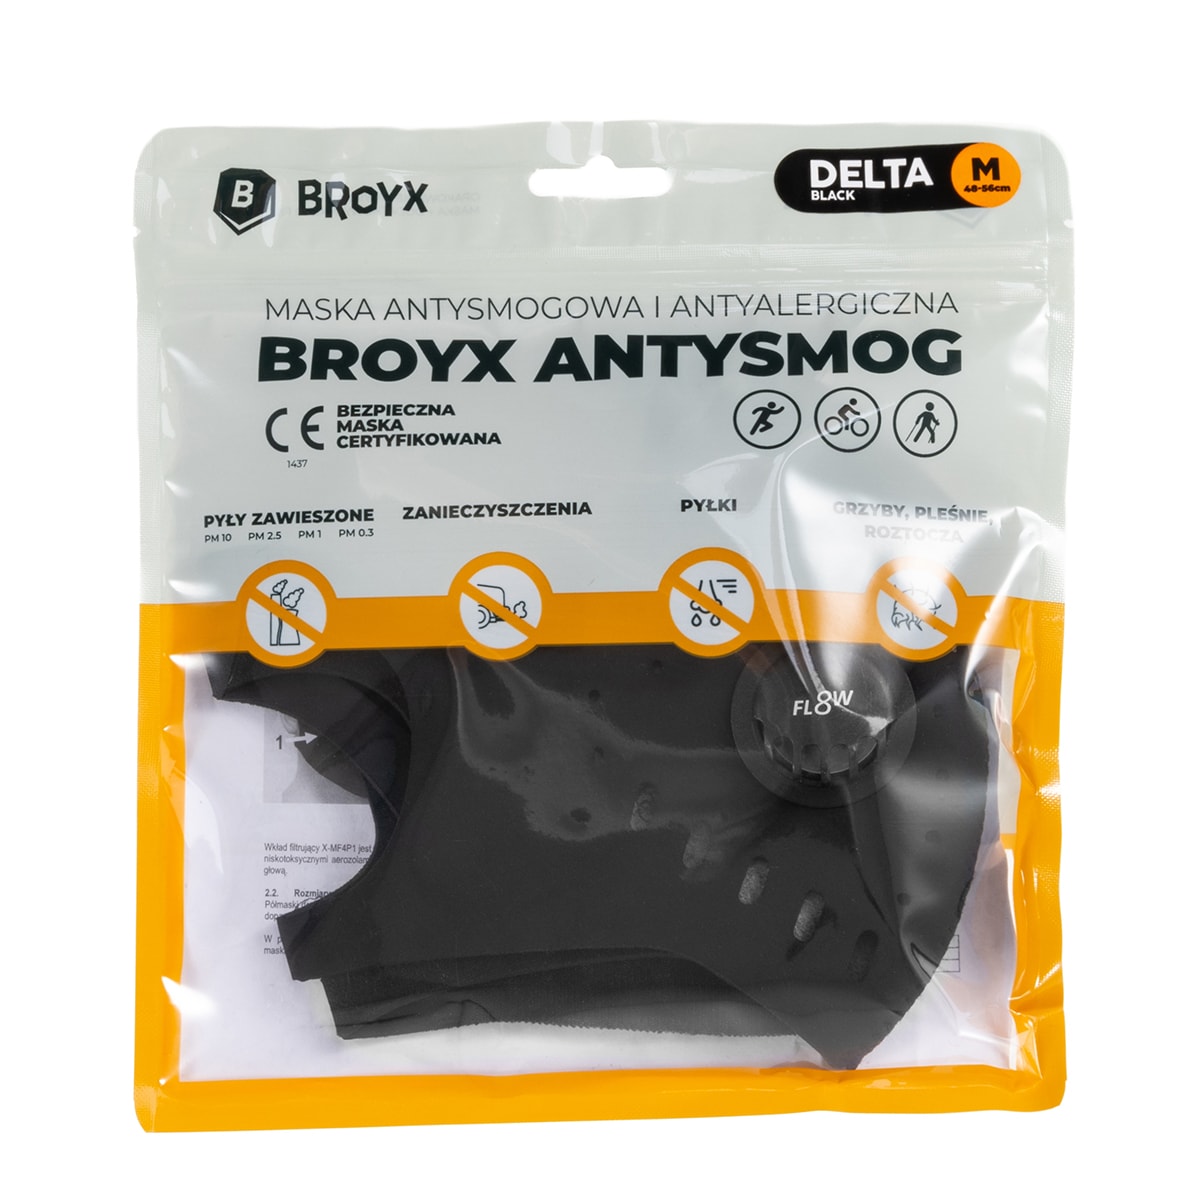 Протисмогова маска Broyx Sport Delta Black